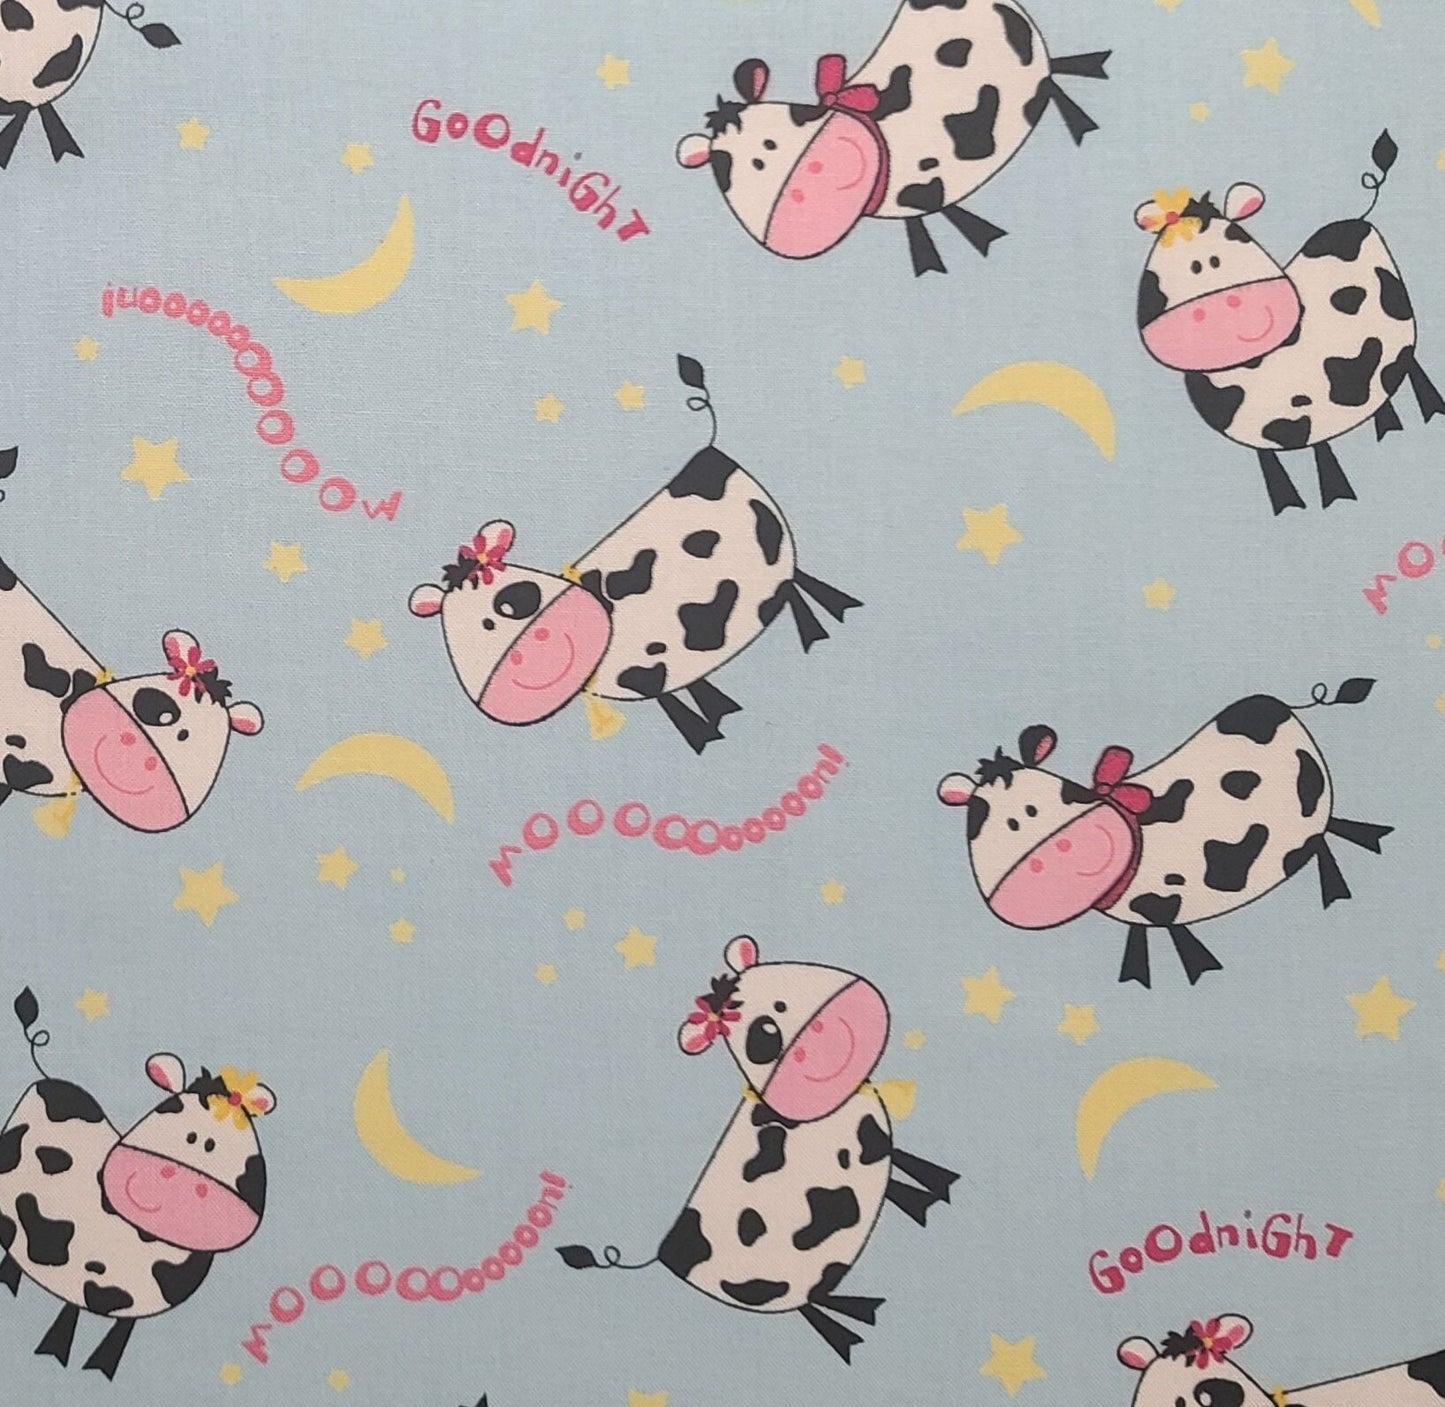 EOB - Sky Blue Fabric / Black and White Cartoon-Style Cow Print / Pink Good Night Script